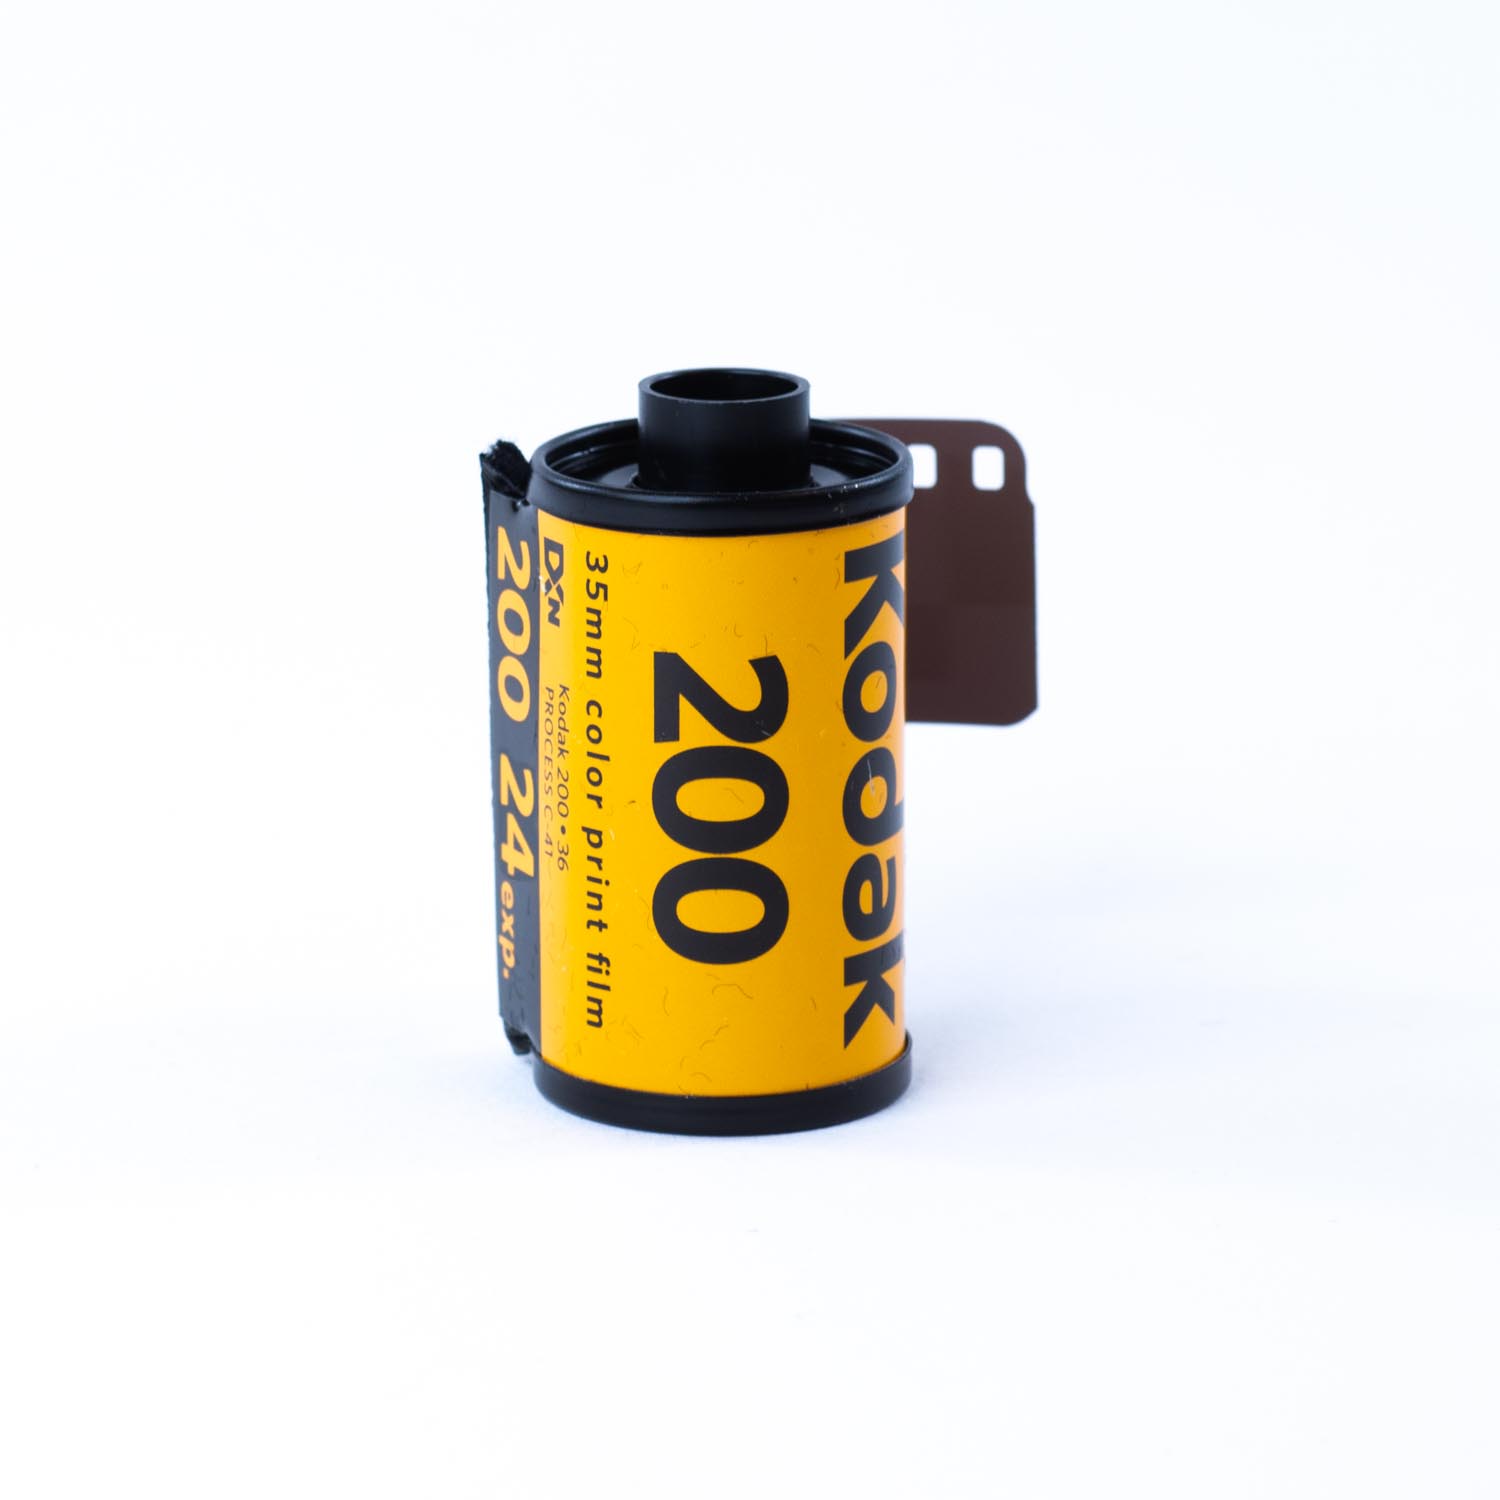 TVignette pour Kodak GOLD 200 - 135-24